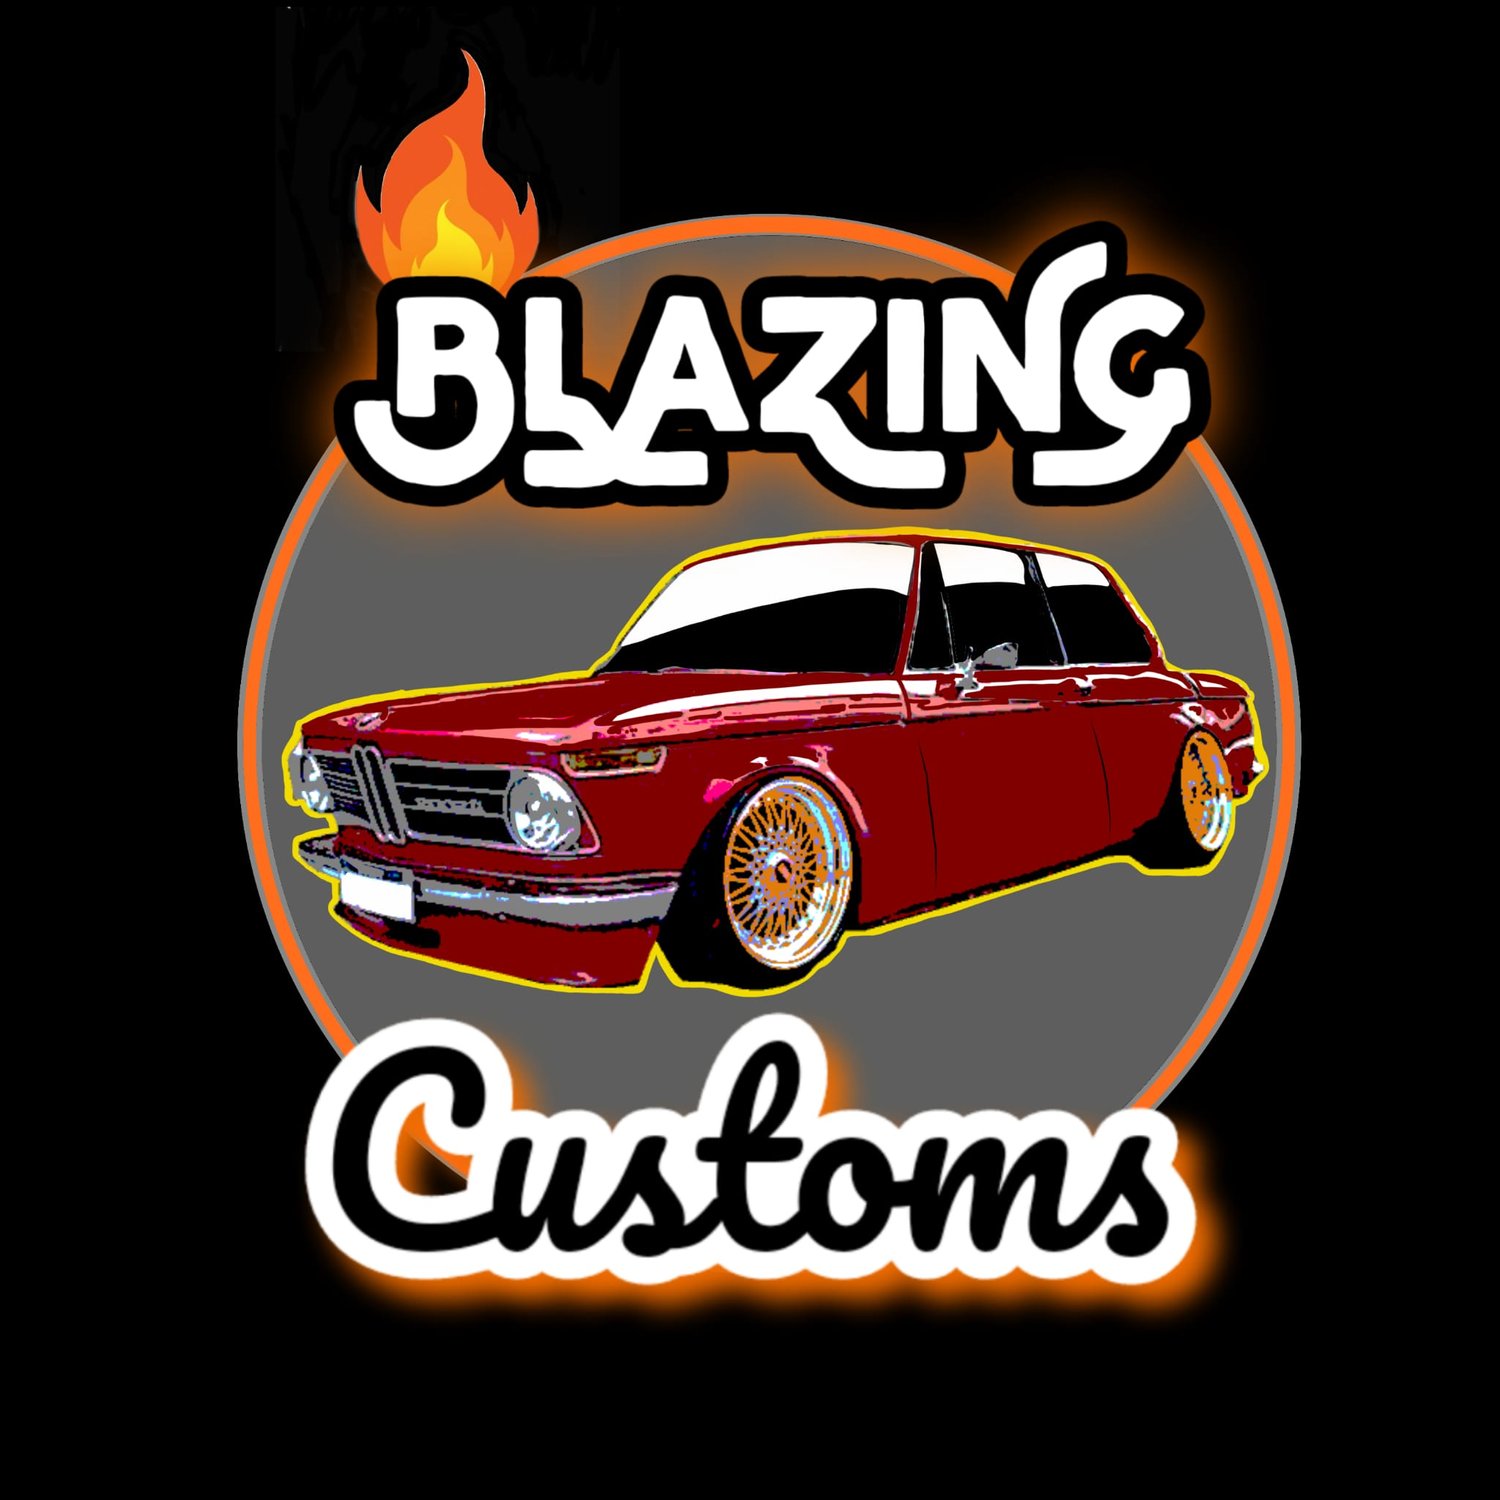 Blazing Customs